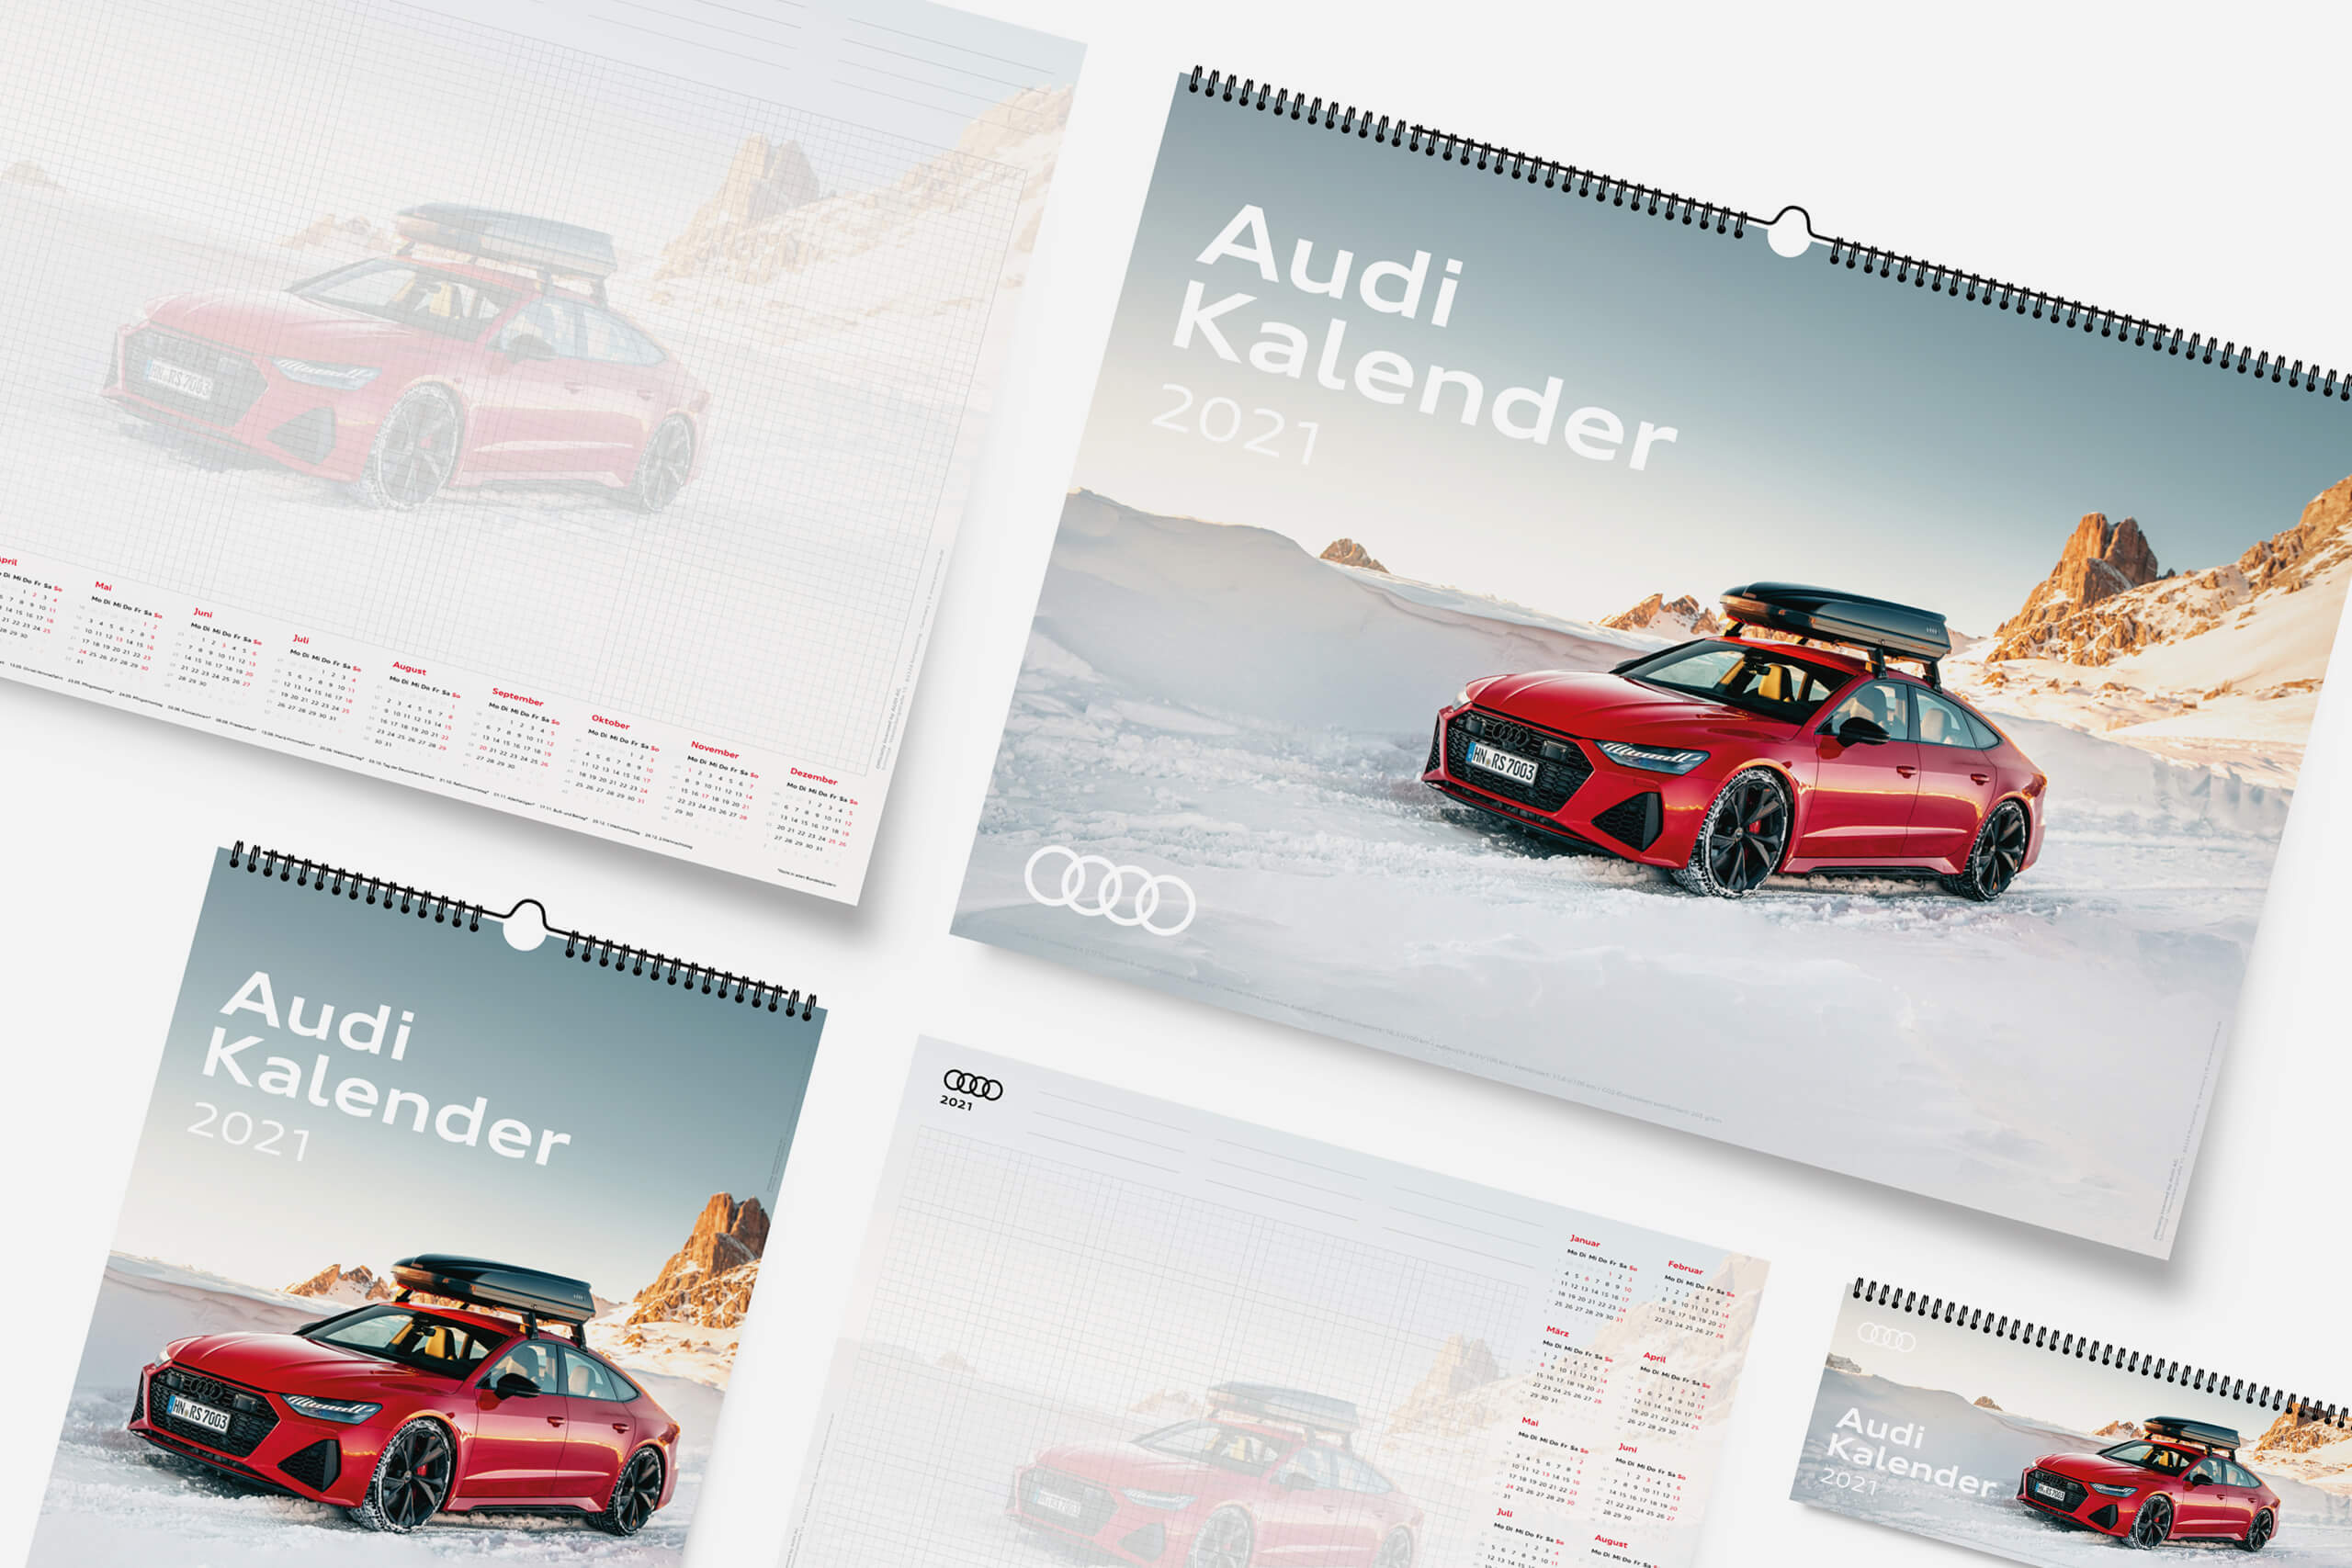 Audi Kalender 2021